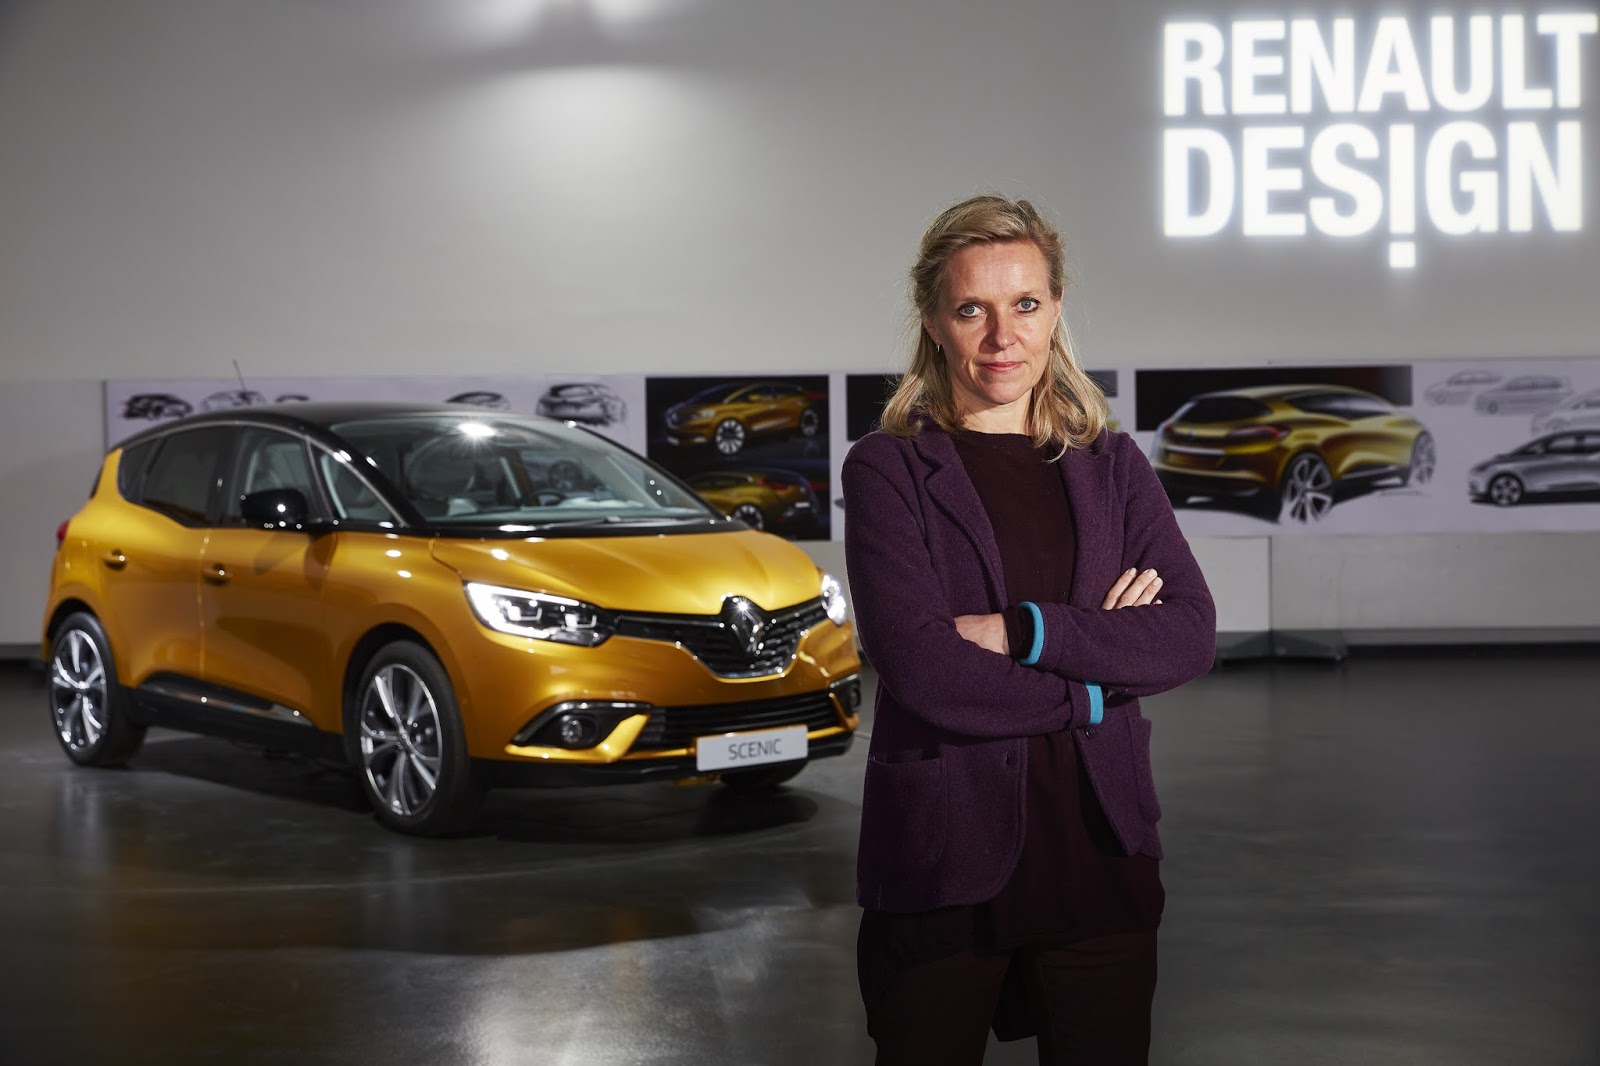 Agneta2BDahlgren2B25262BNew2BSc25C325A9nic 25C225A92BJean Christophe2BMOUNOURY Femme de l'année Responsable du design de Renault !